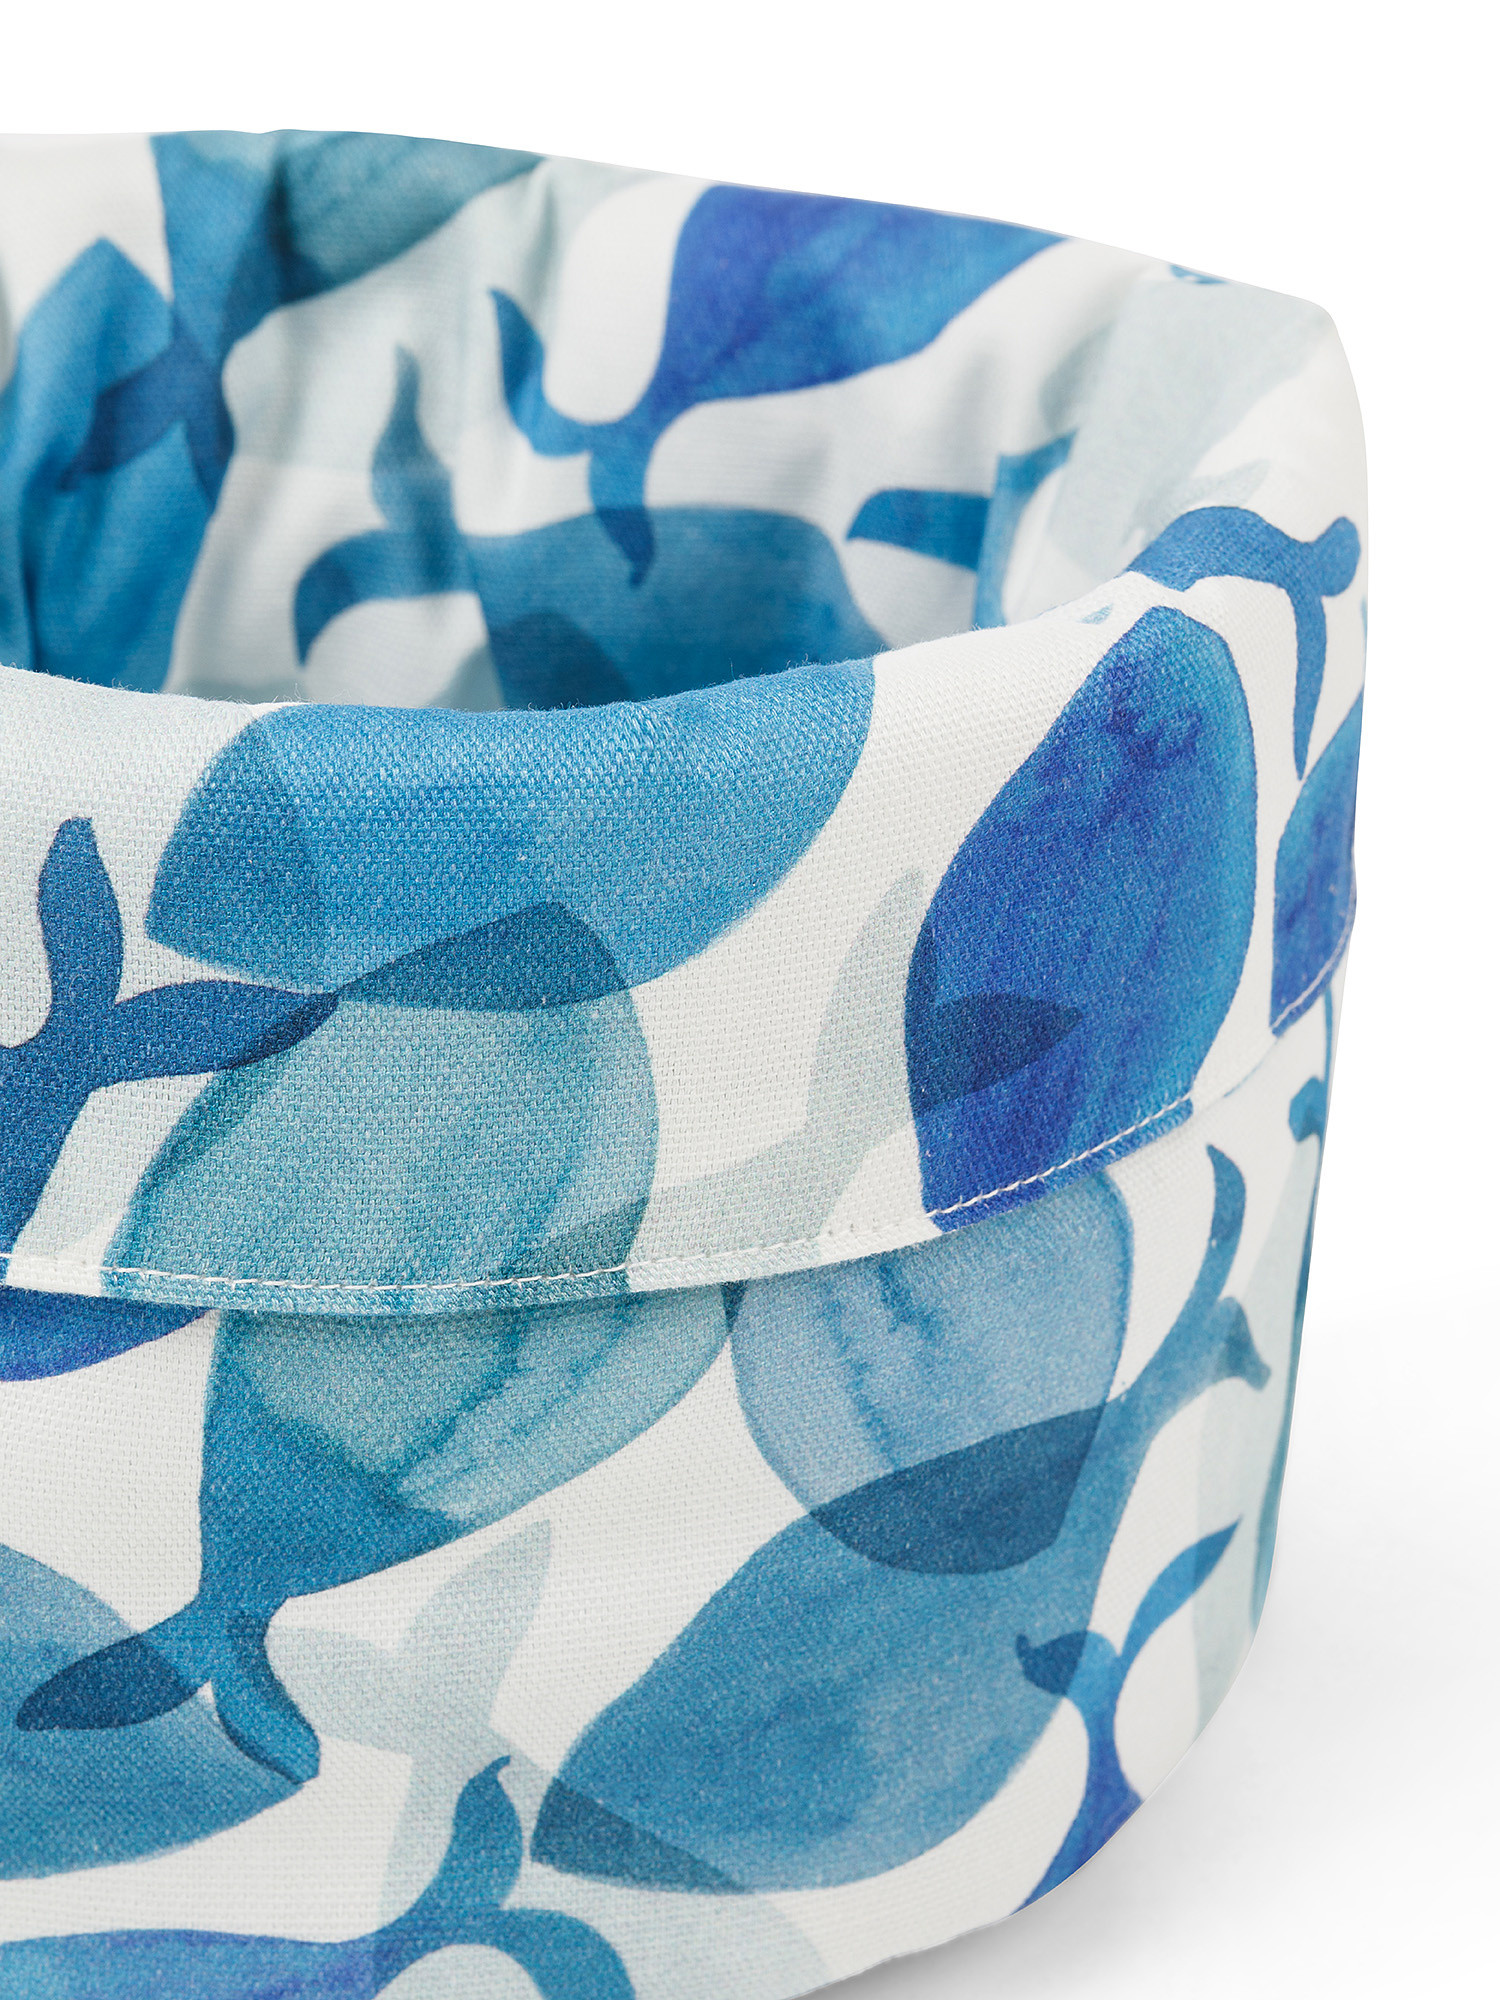 Round fish print cotton basket, Blue, large image number 1